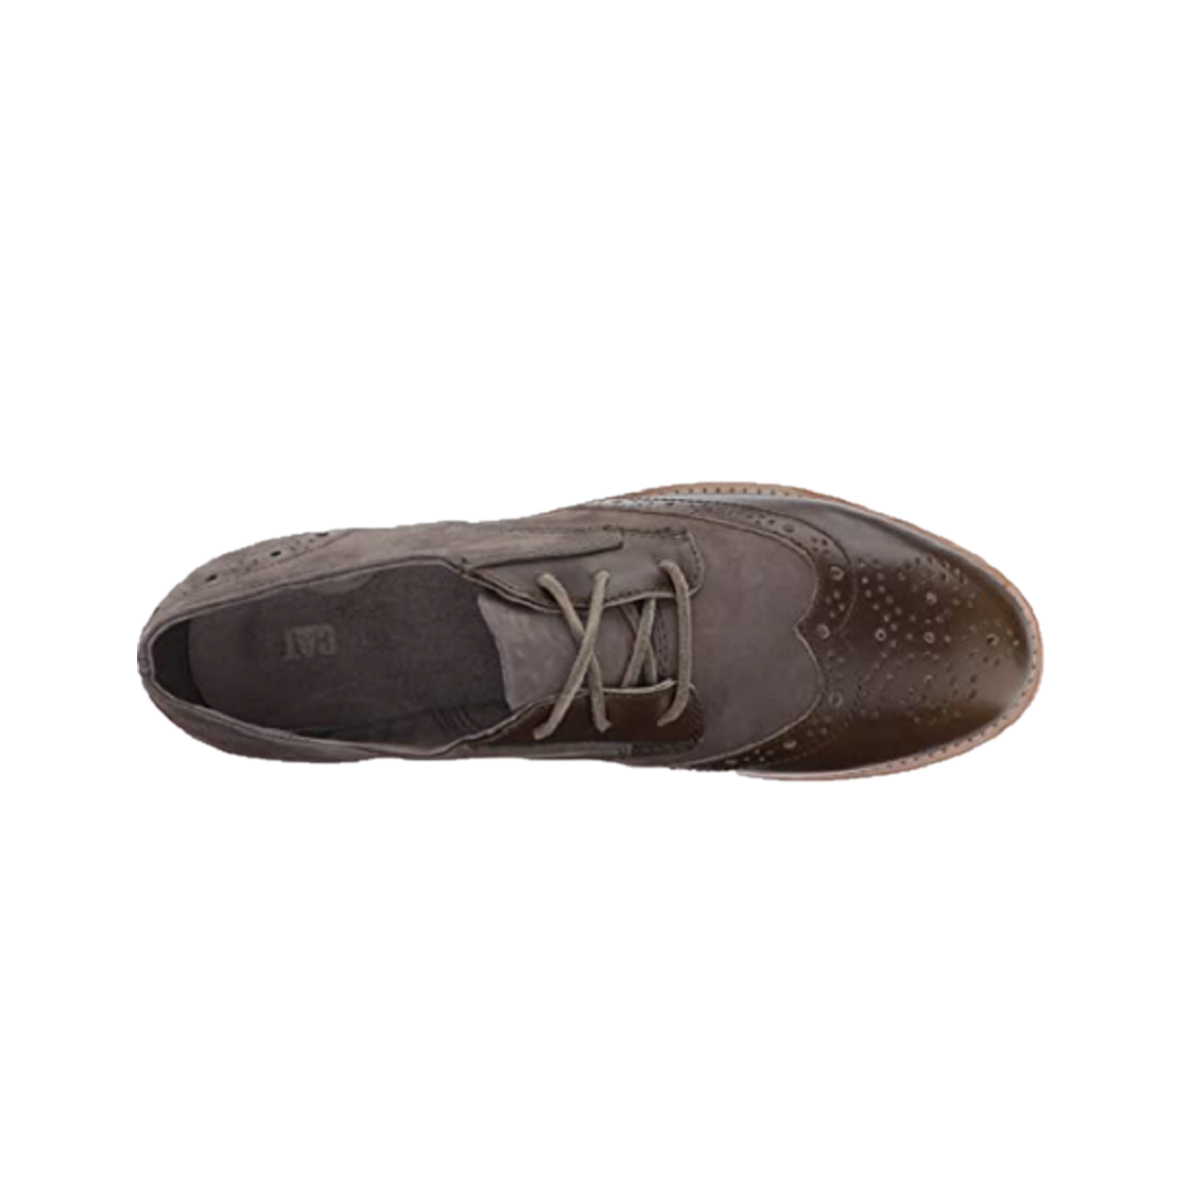 CATERPILLAR P309698 REEGAN II WMN'S (Medium) Olive Leather Casual Shoes